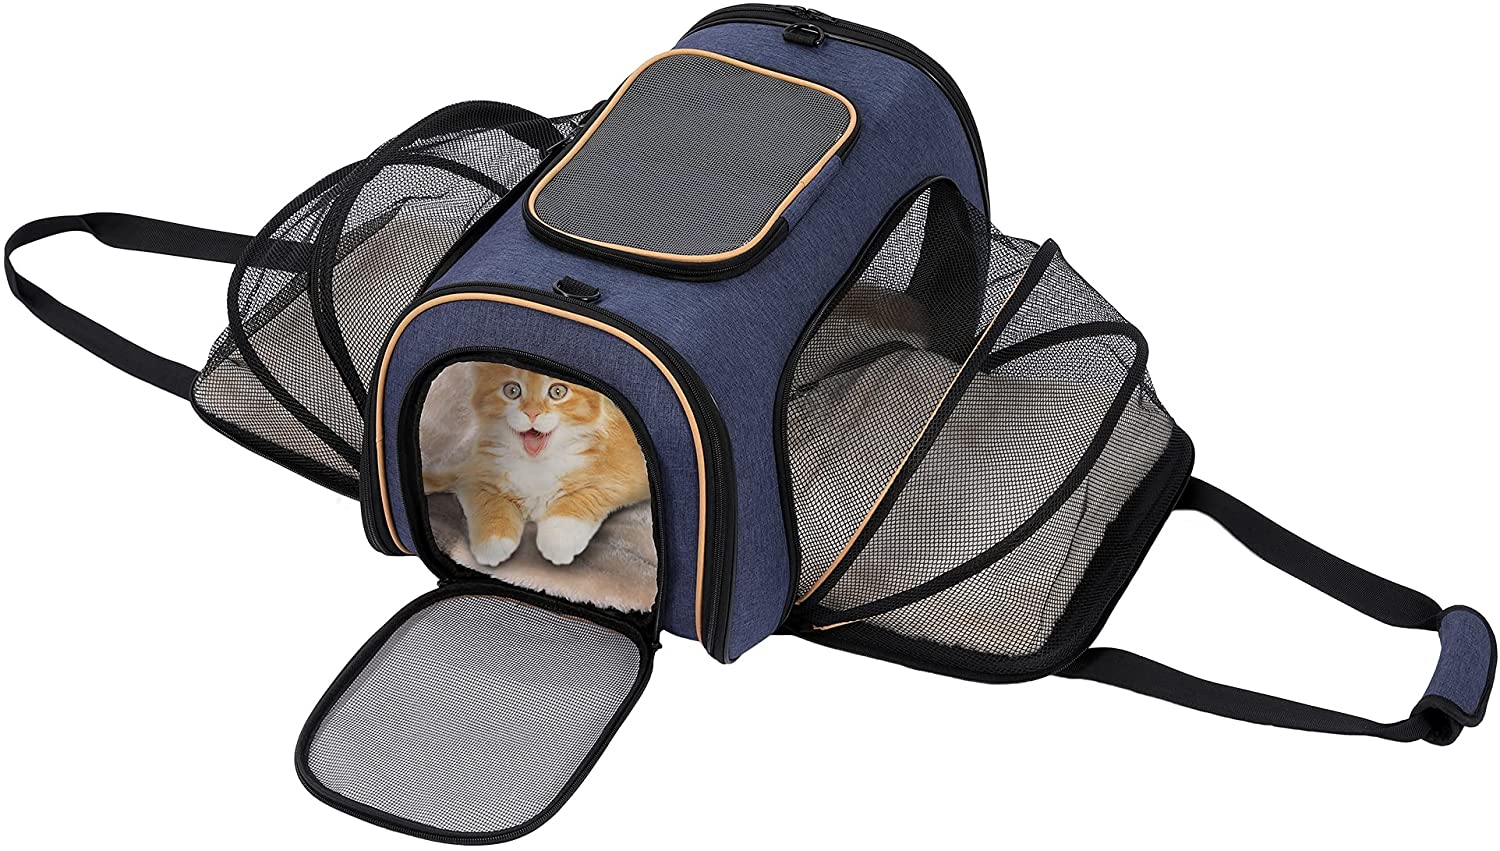 IOKHEIRA Pet Carrier, Breathable Foldable Cat Carrier, Expandable Dog